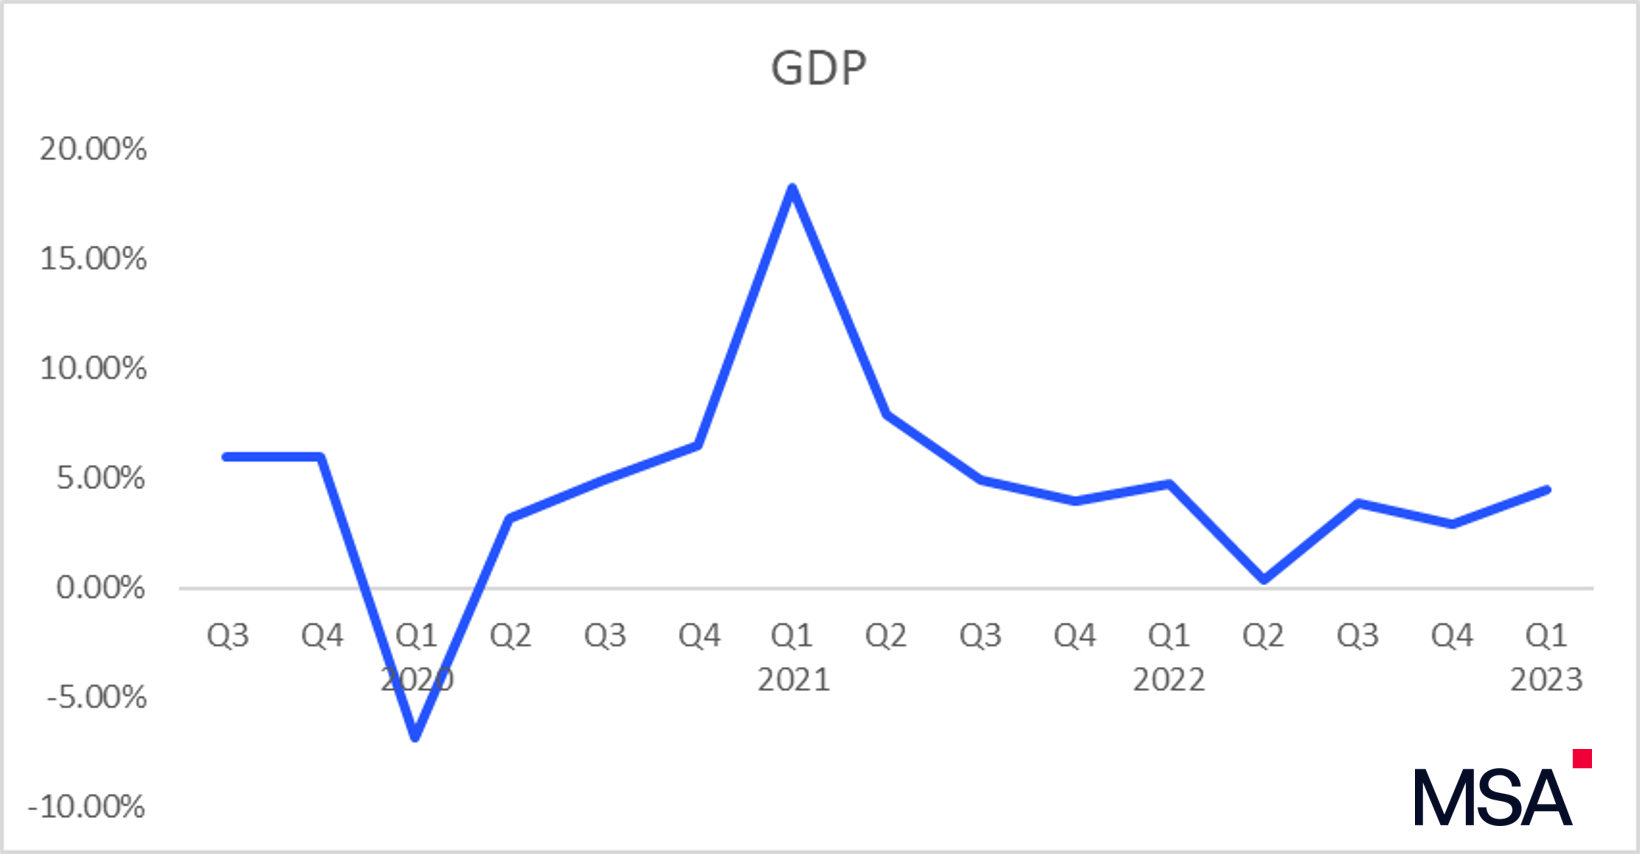 GDP Q1 2023